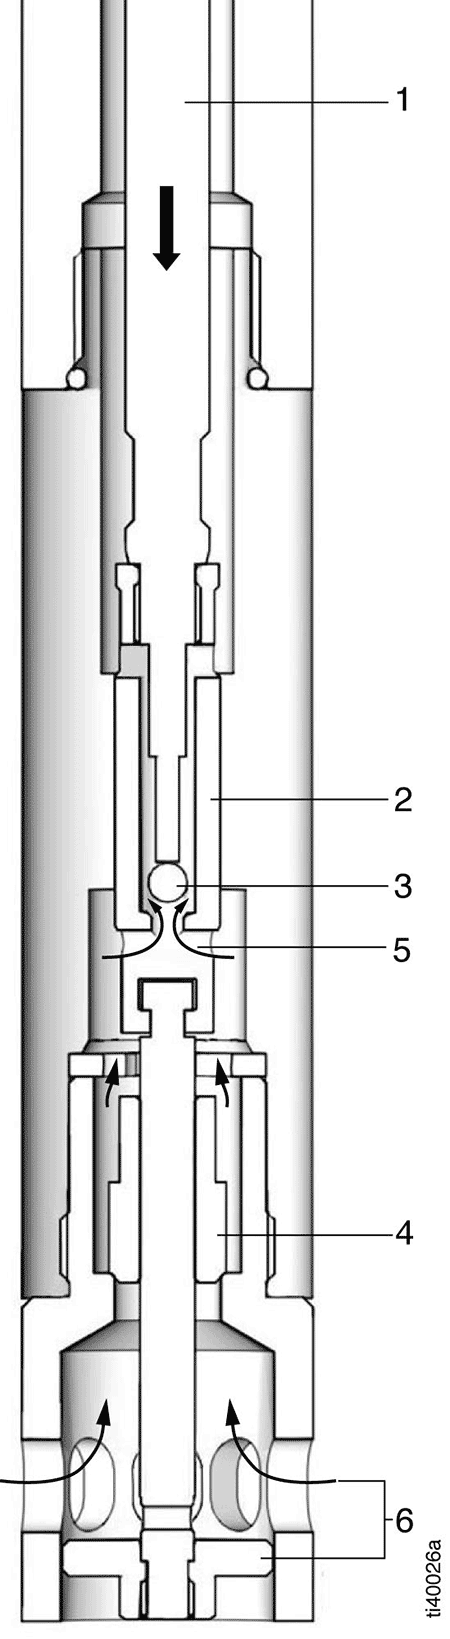 IMAGE 9: Downstroke of the priming piston pump 